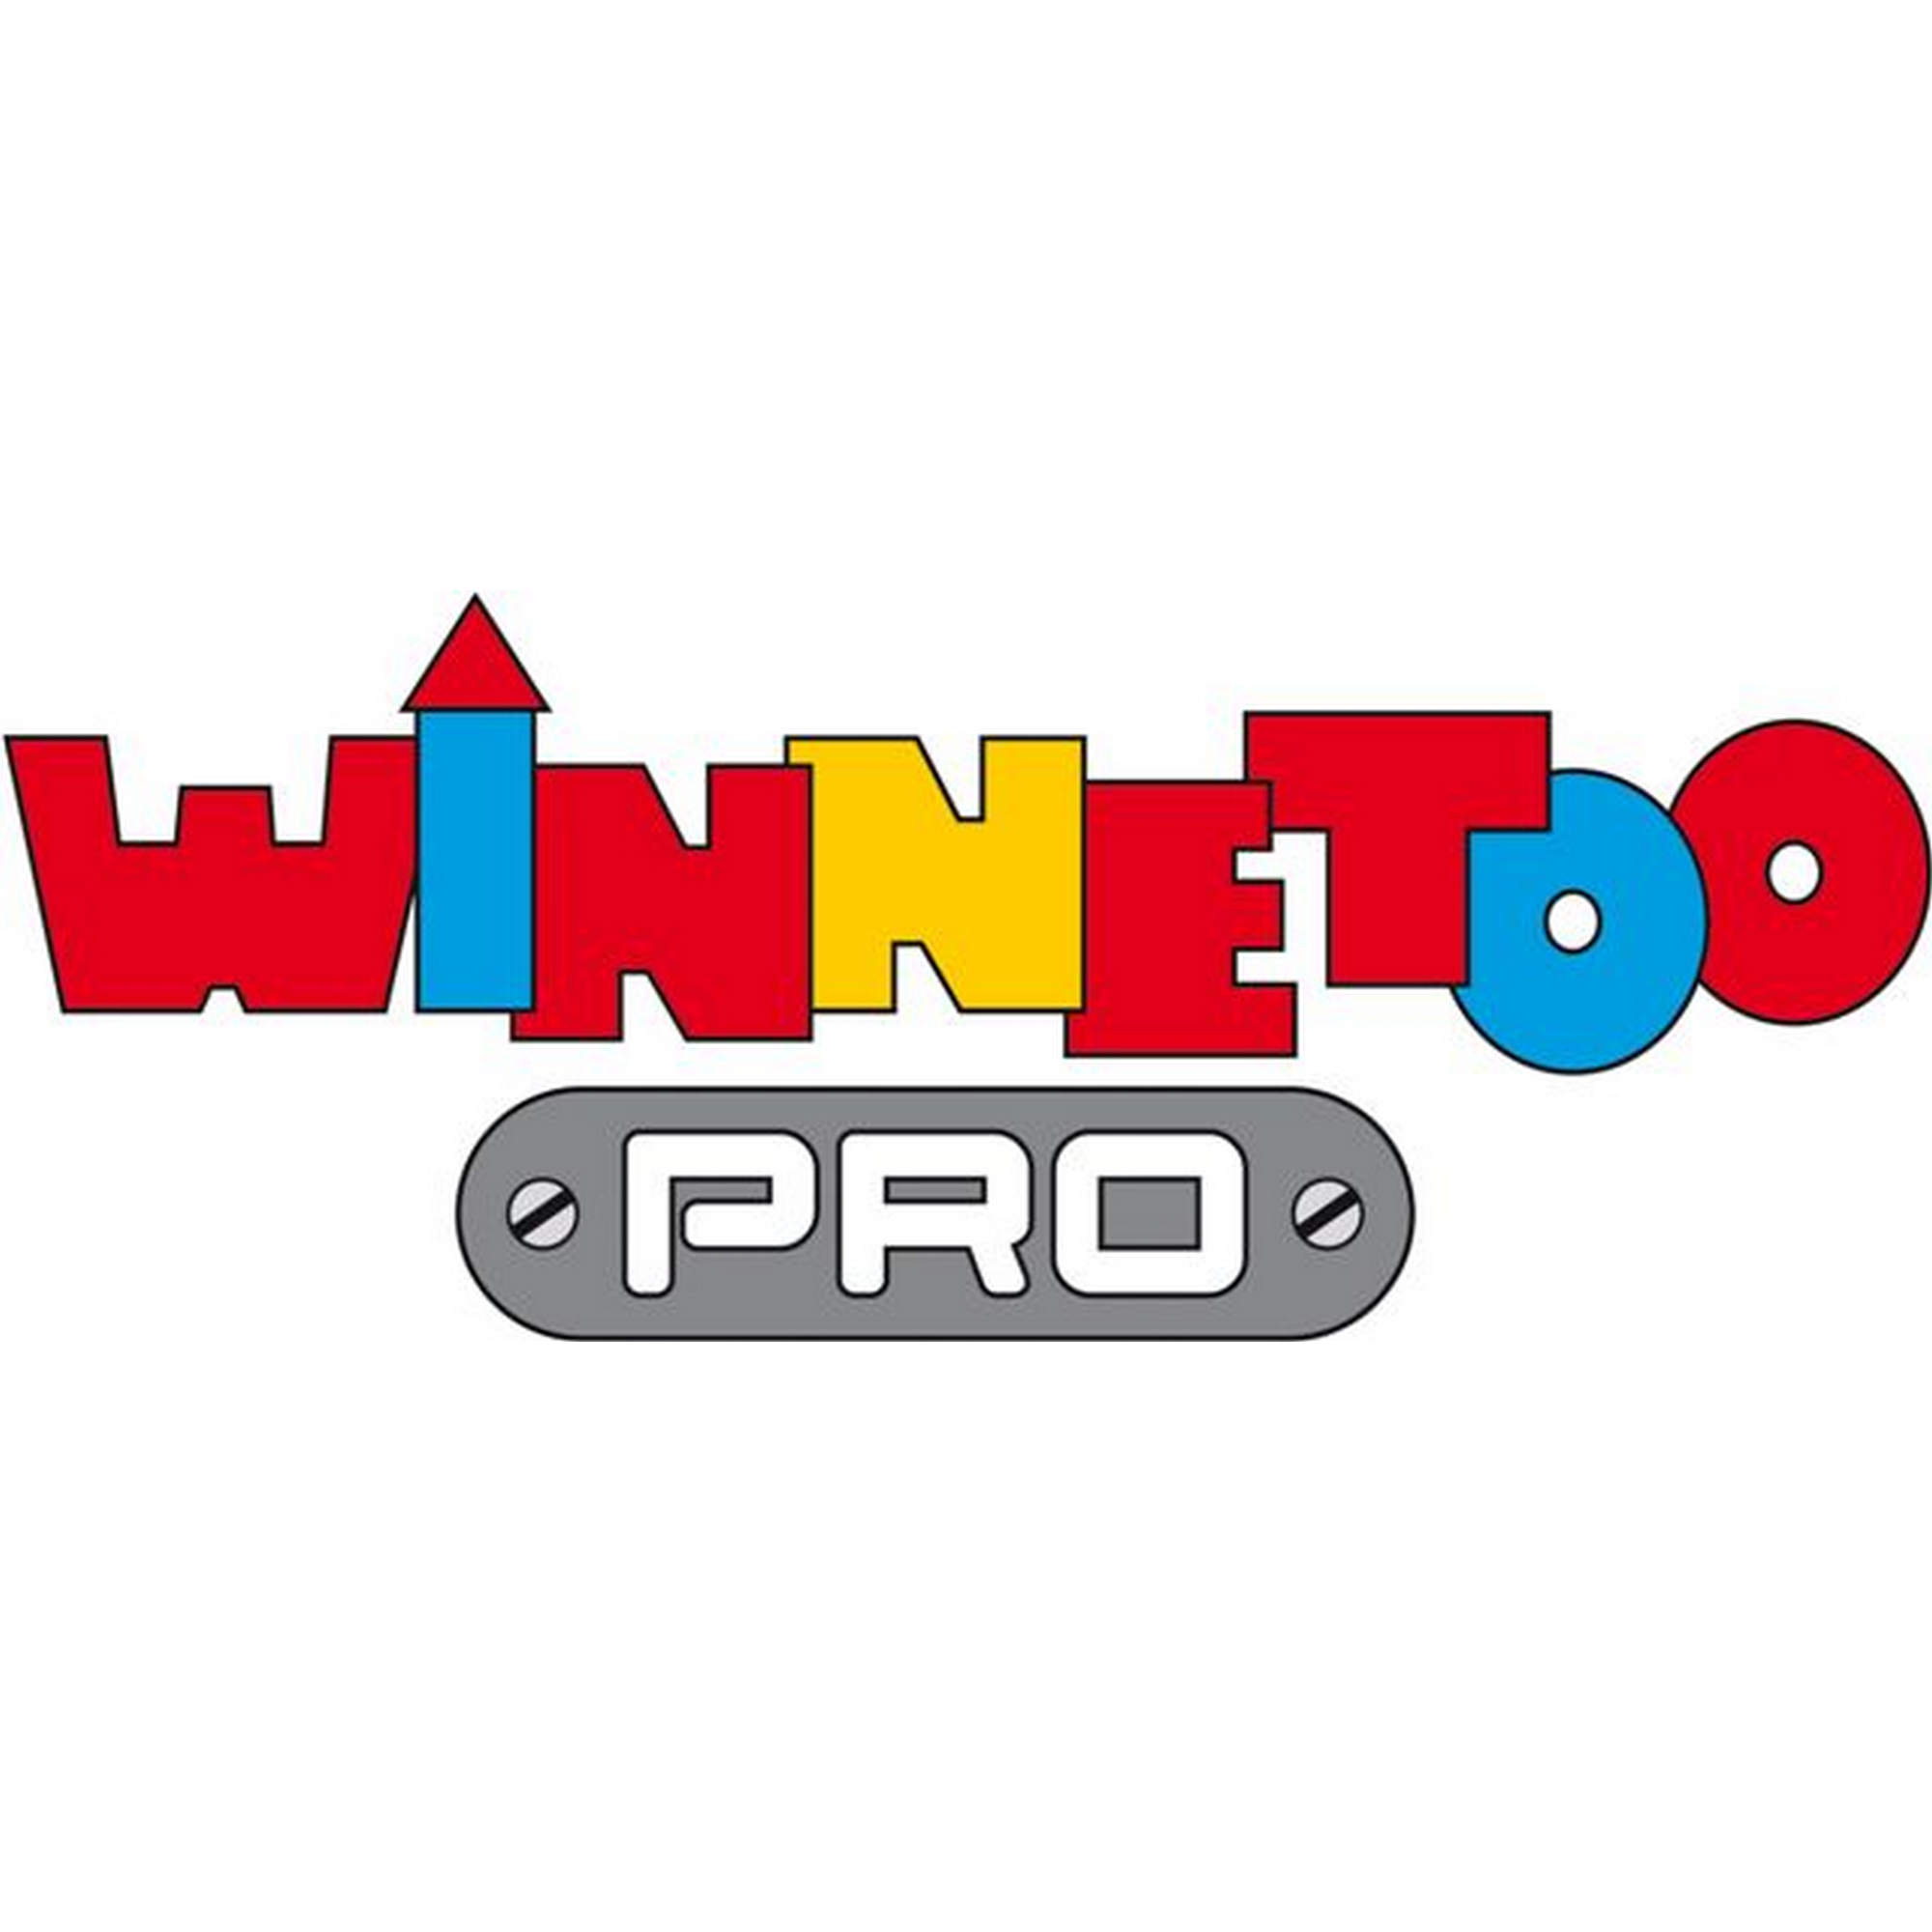 Schaukelgelenk 'Winnetoo Pro' Edelstahl, mit doppeltem Kugellager + product picture